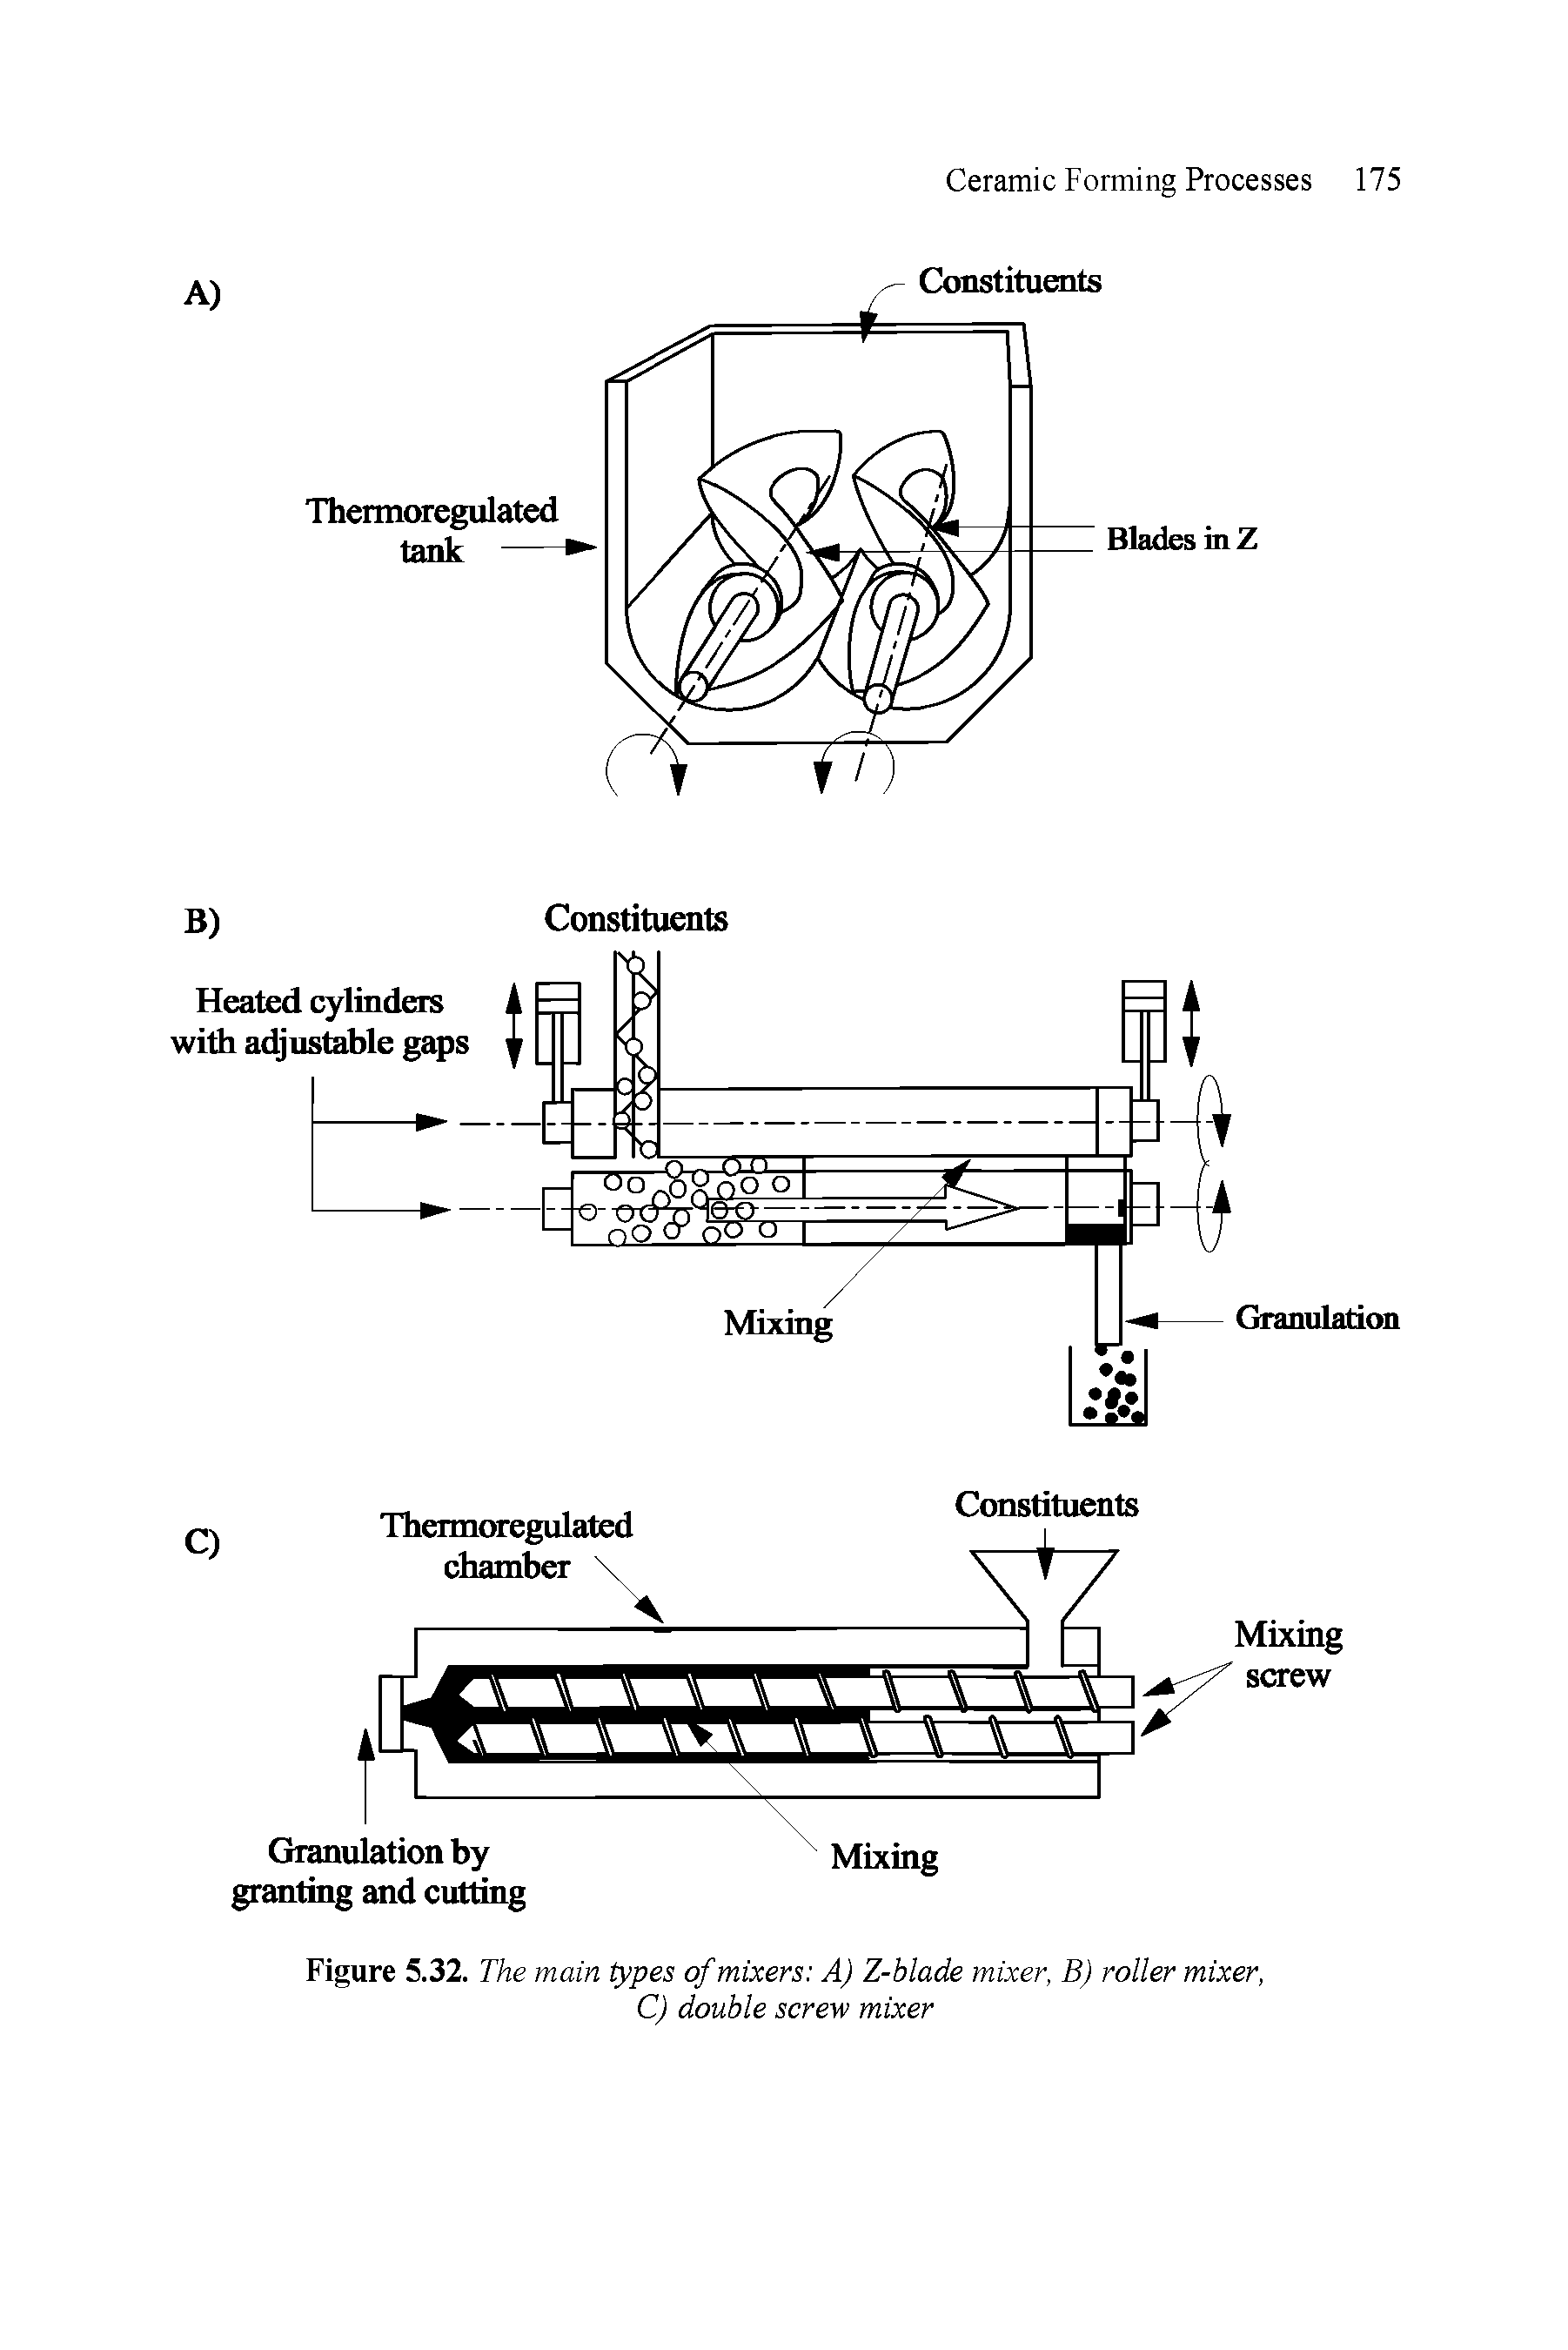 Figure 5.32. The main types of mixers A) Z-blade mixer, B) roller mixer, C) double screw mixer...